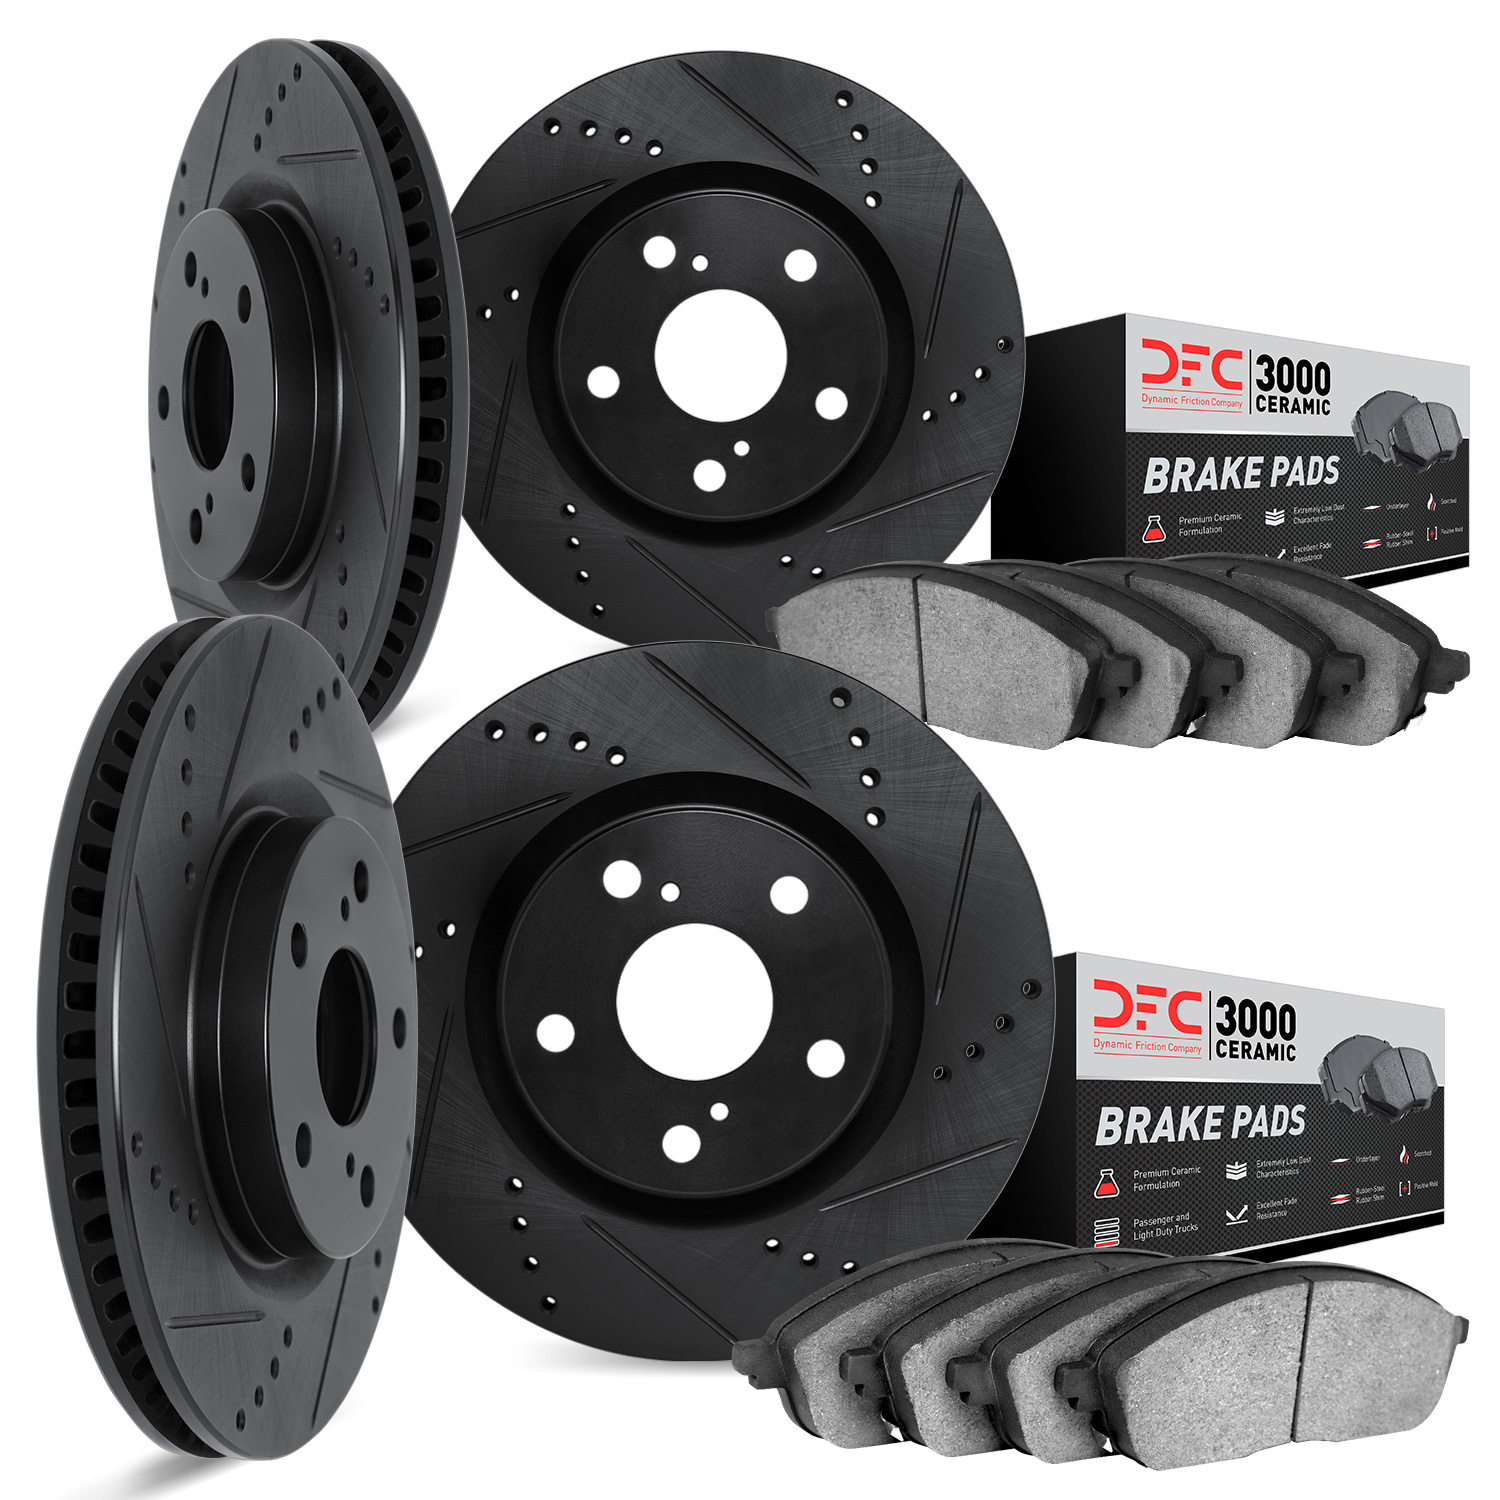 8304-75013 Drilled/Slotted Brake Rotors with 3000-Series Ceramic Brake Pads Kit [Black], 2006-2013 Lexus/Toyota/Scion, Position: